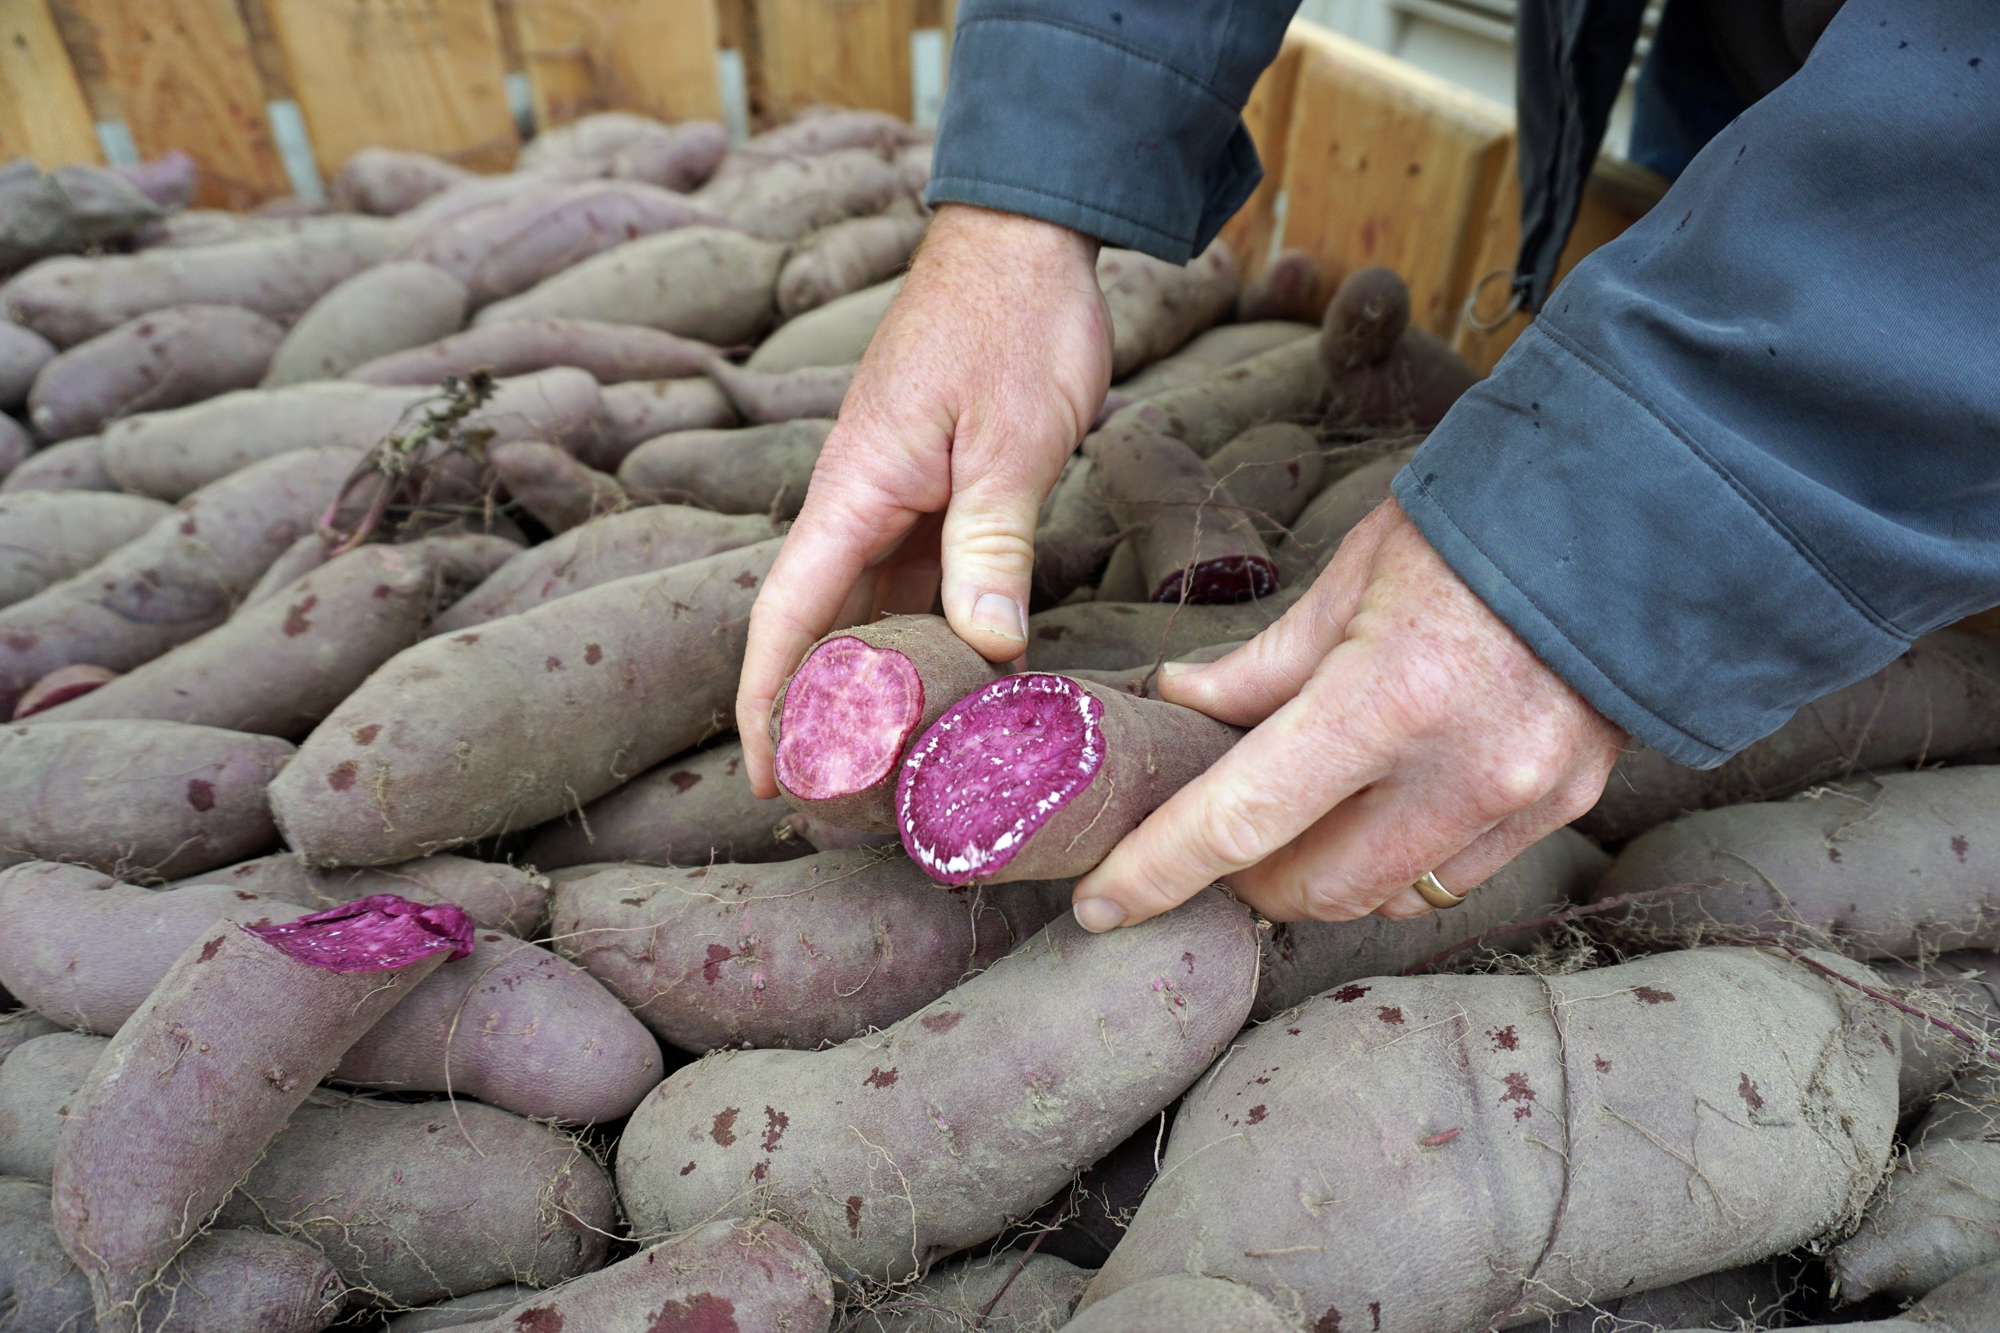 Potatoes, Purple